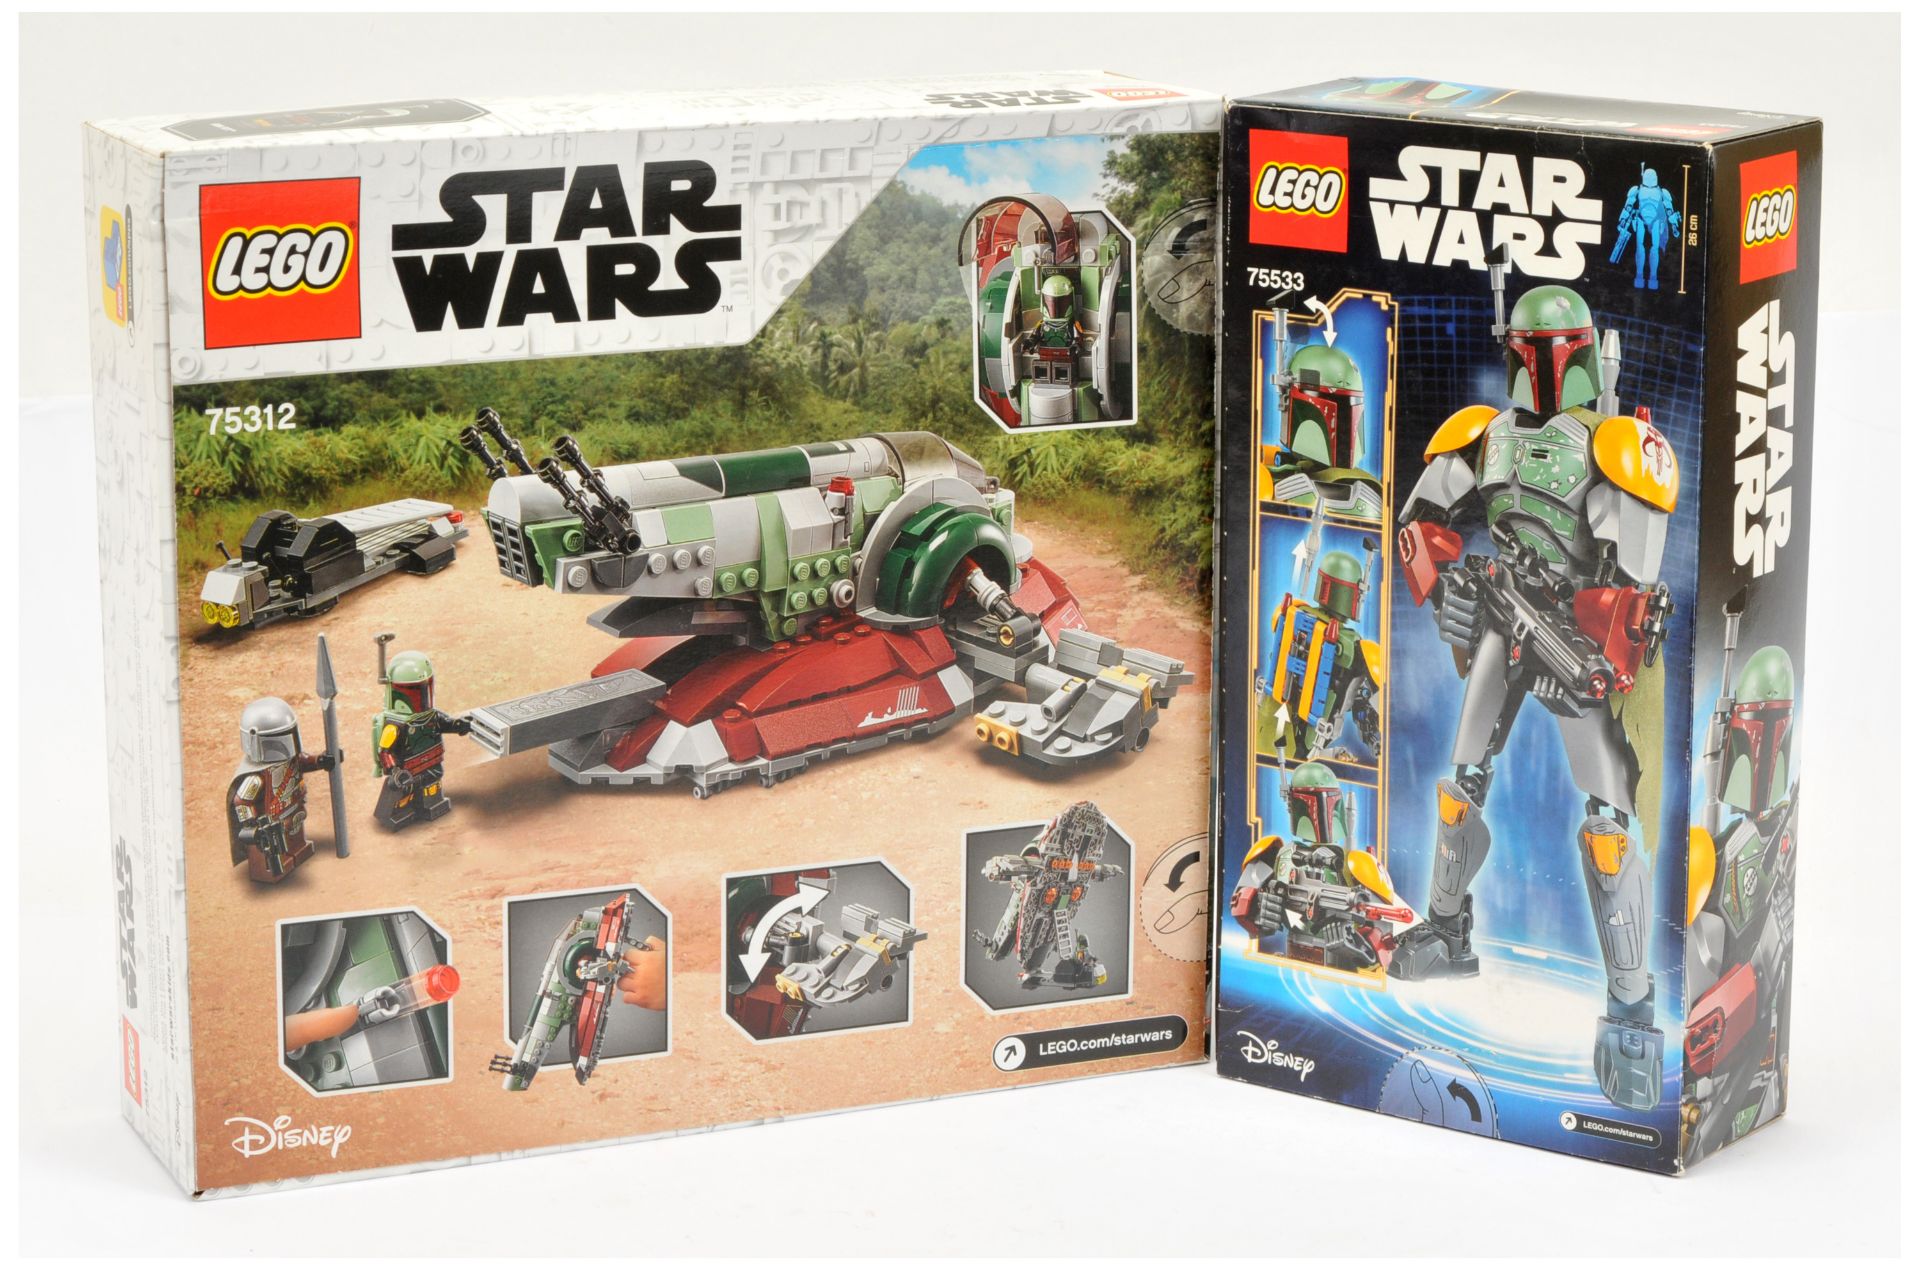 Lego Star Wars sets to include (1) 75312 - Boba Fett's Starship, (2) 75533 Boba Fett. Both within... - Bild 2 aus 2